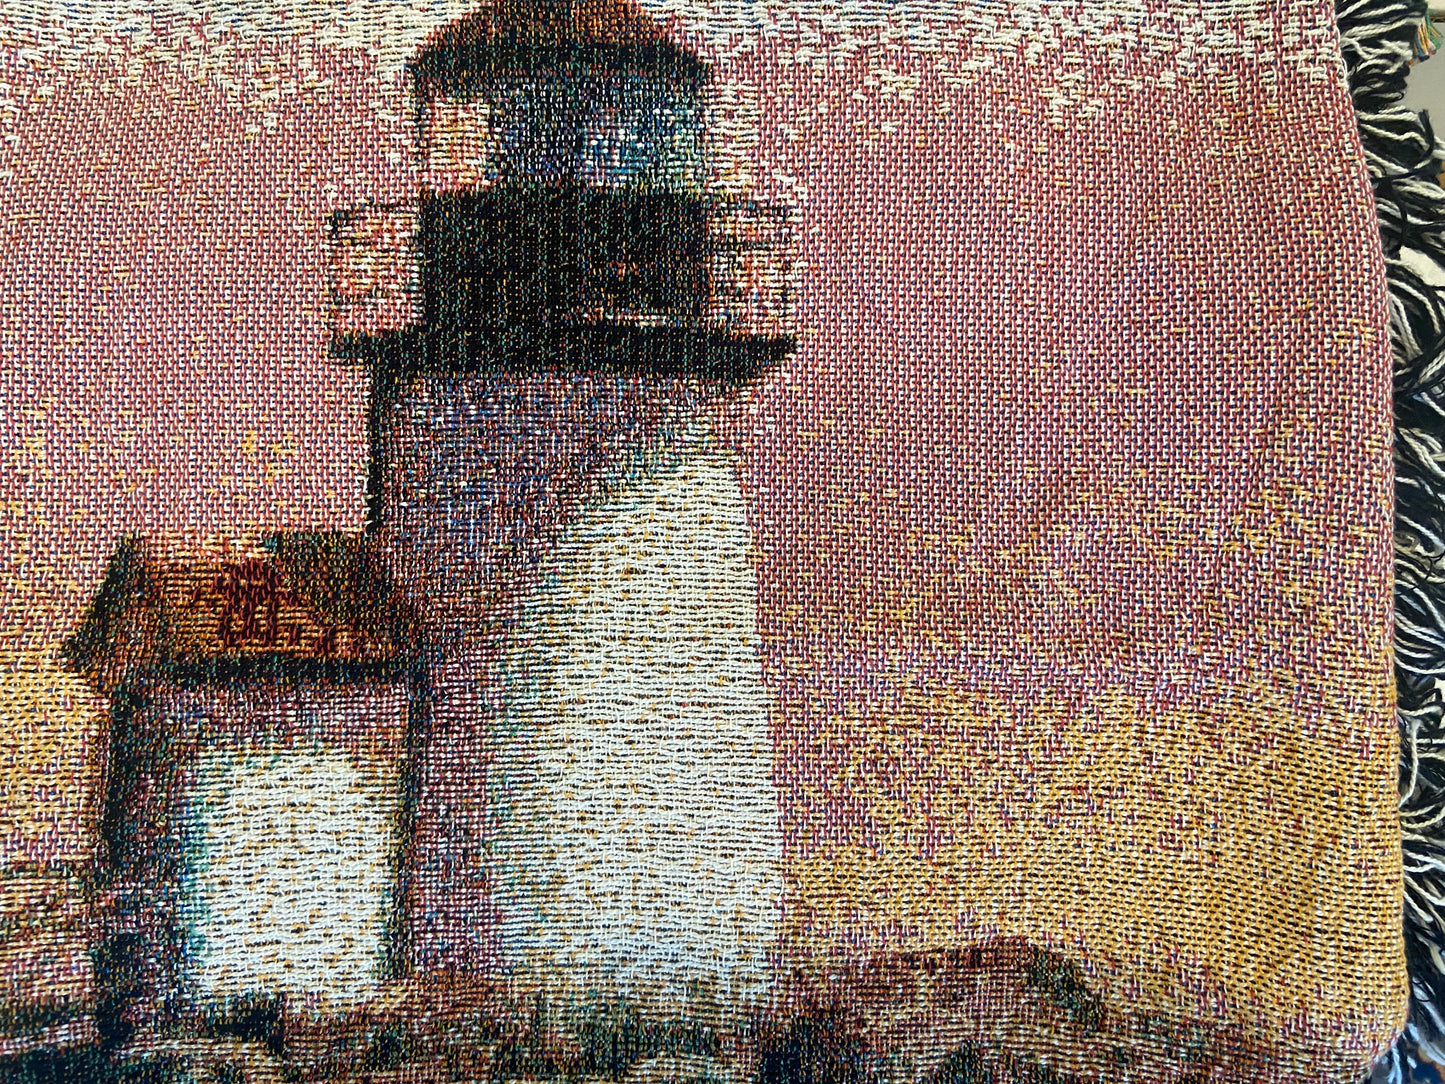 Jacquard Weave Cotton Throw Blanket Of Nantucket's Brant Point Light